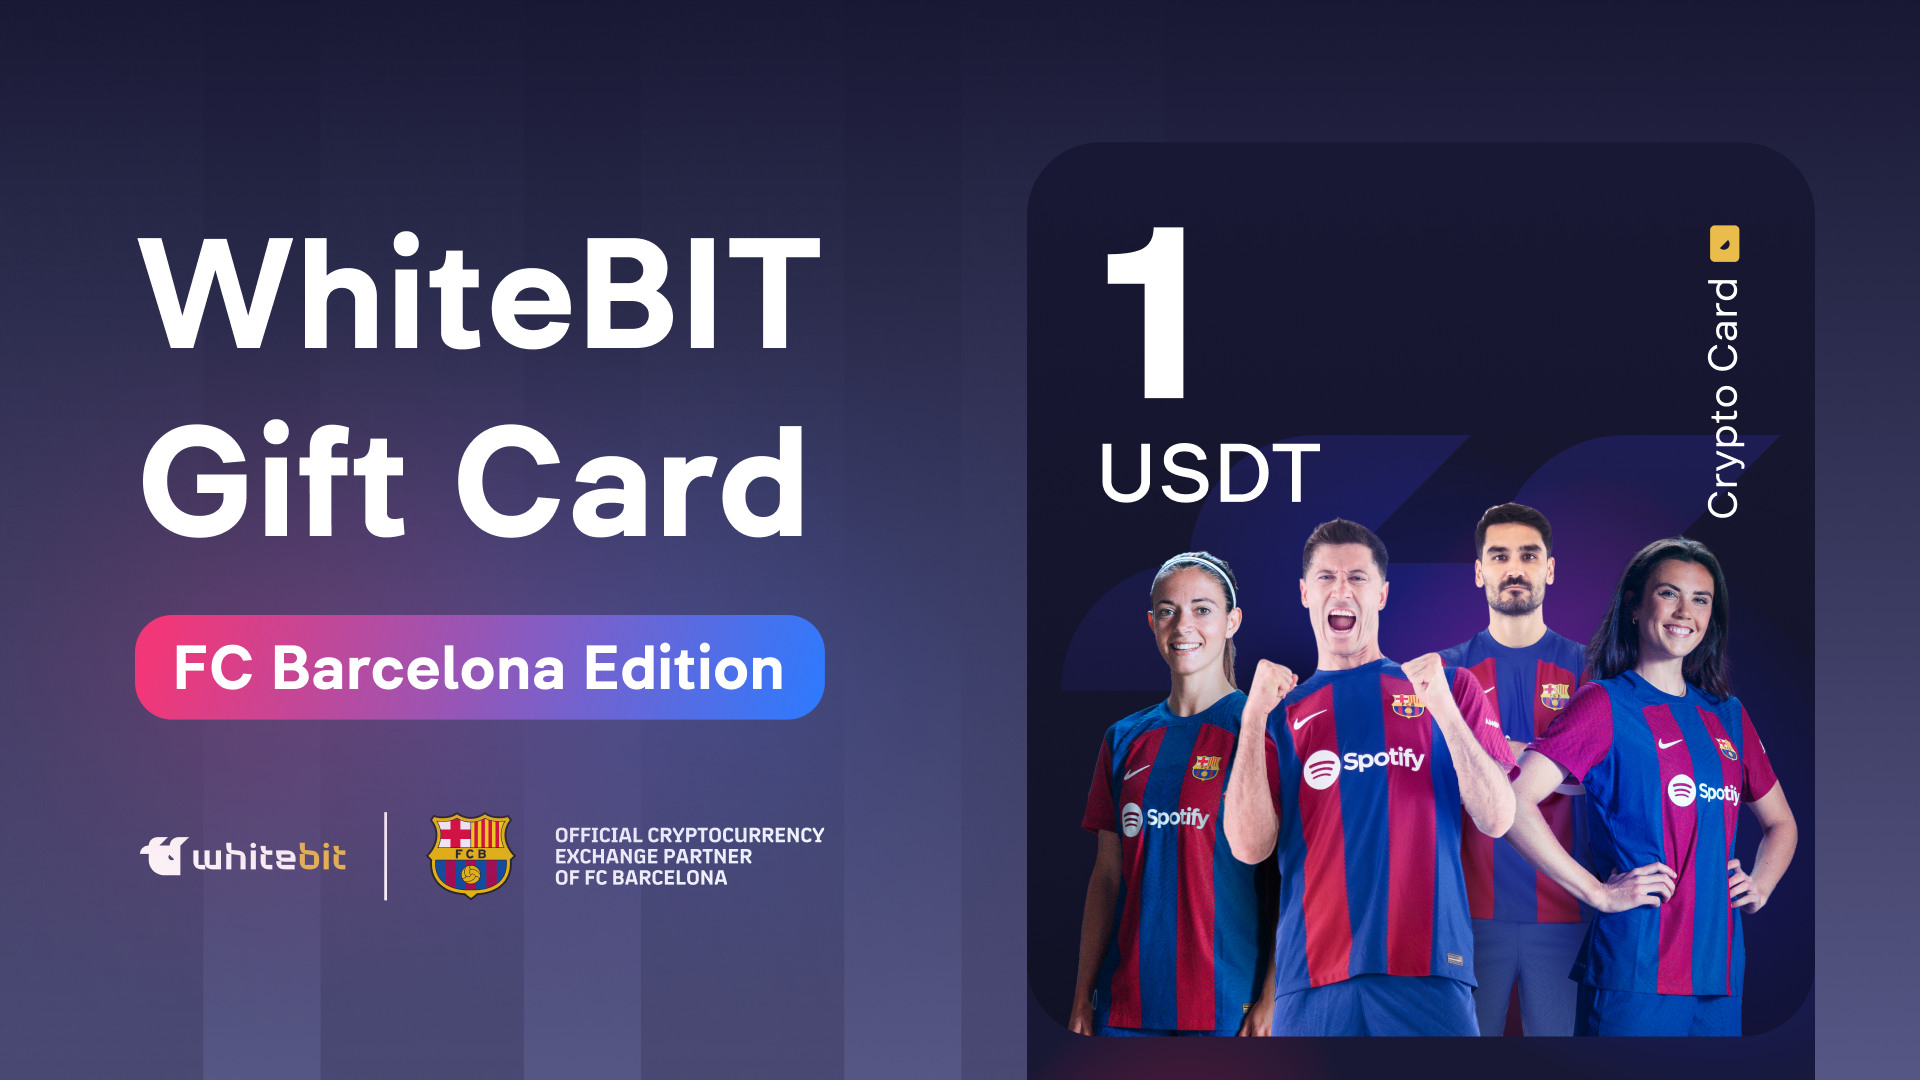 WhiteBIT - FC Barcelona Edition - 1 USDT Gift Card 1.39 USD